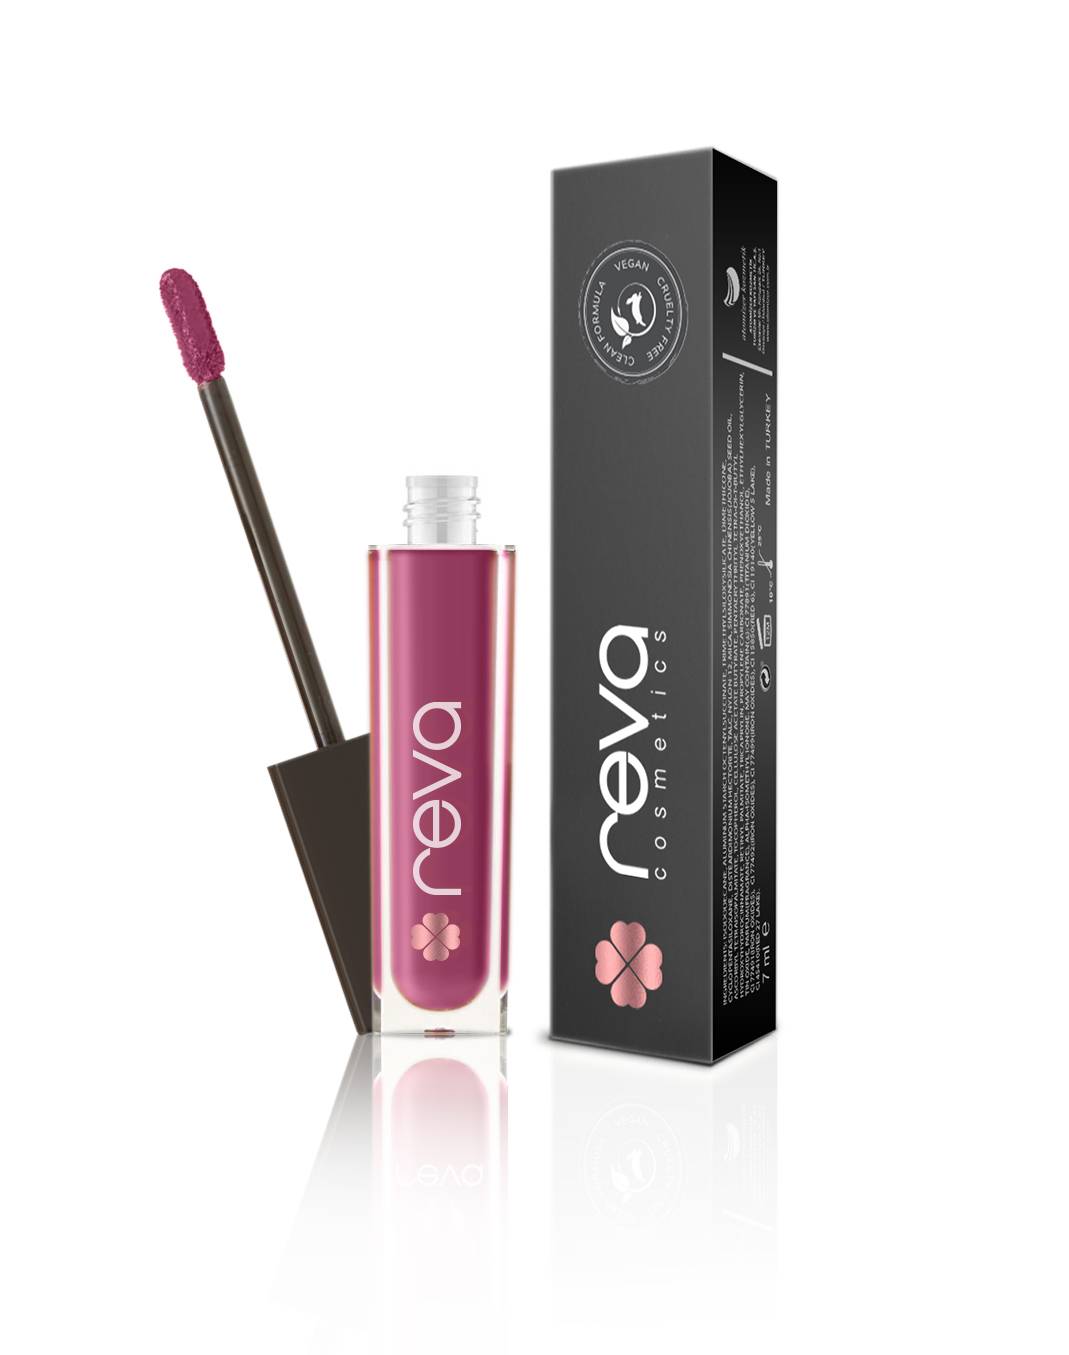 Velvet Redefined: Reva Creamy Matte Lip Gloss in Beet Red - Shade No. 104 - Vegan & Clean Beauty